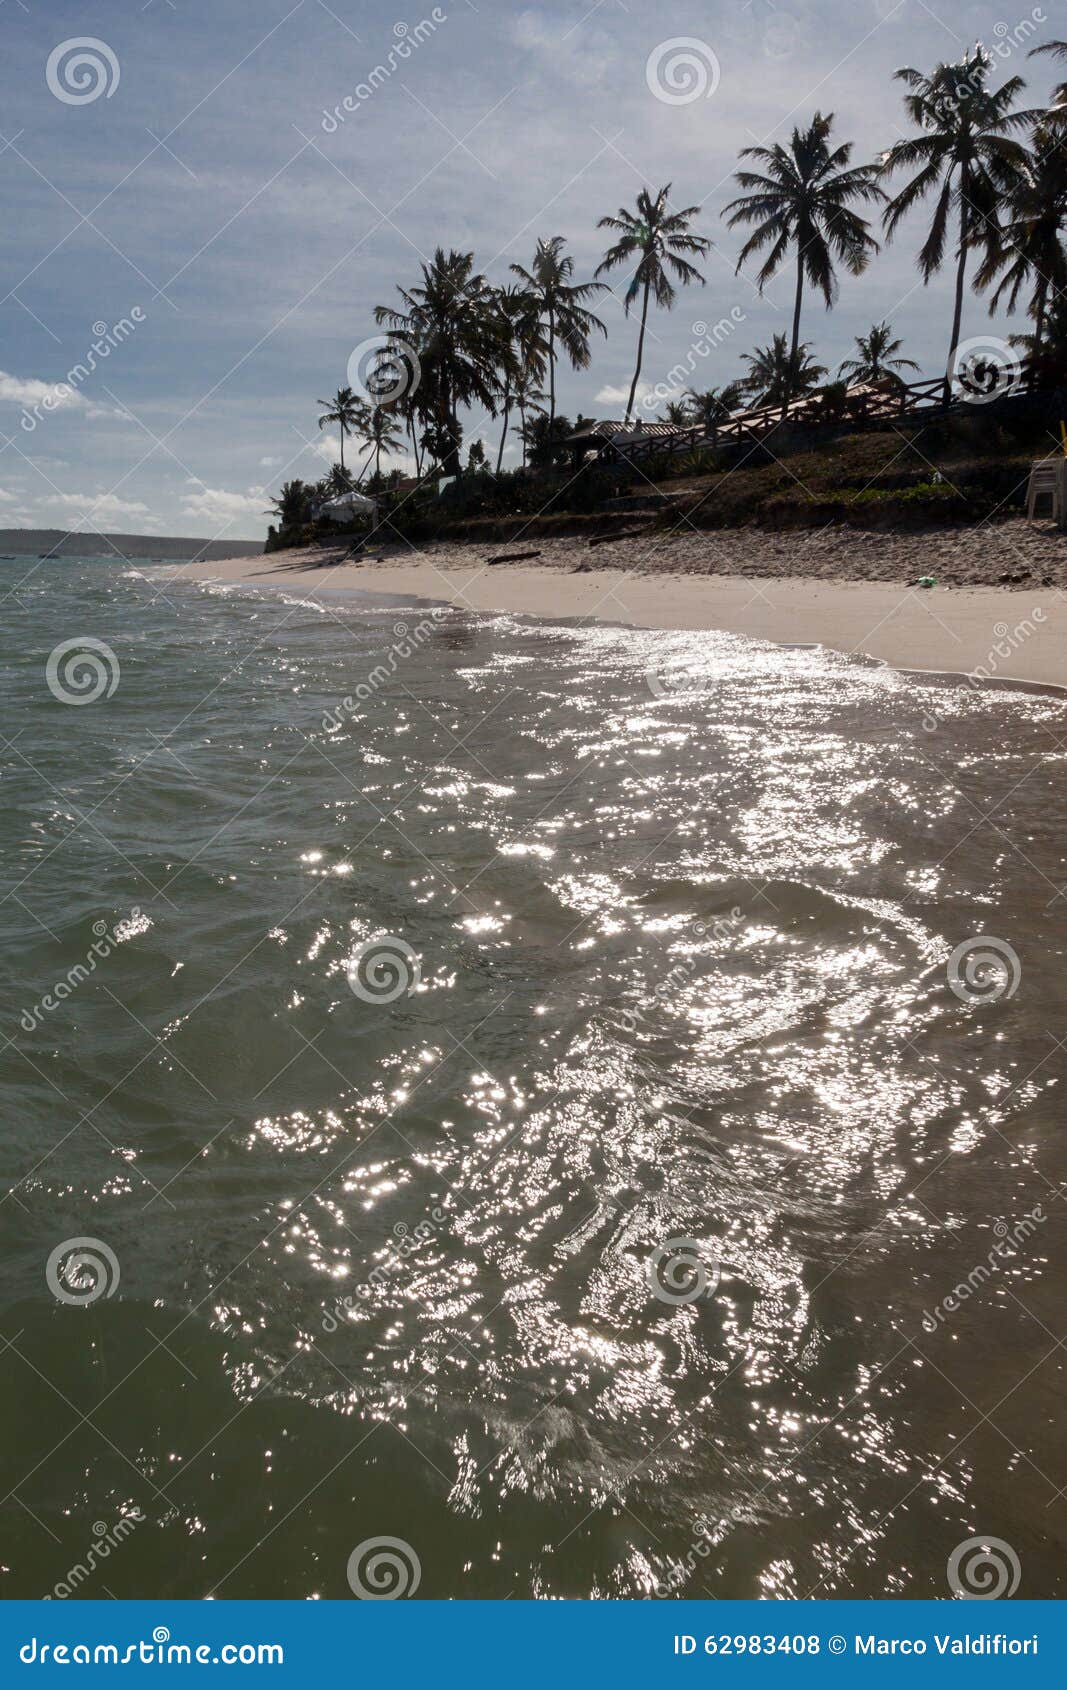 praia do frances, brazil